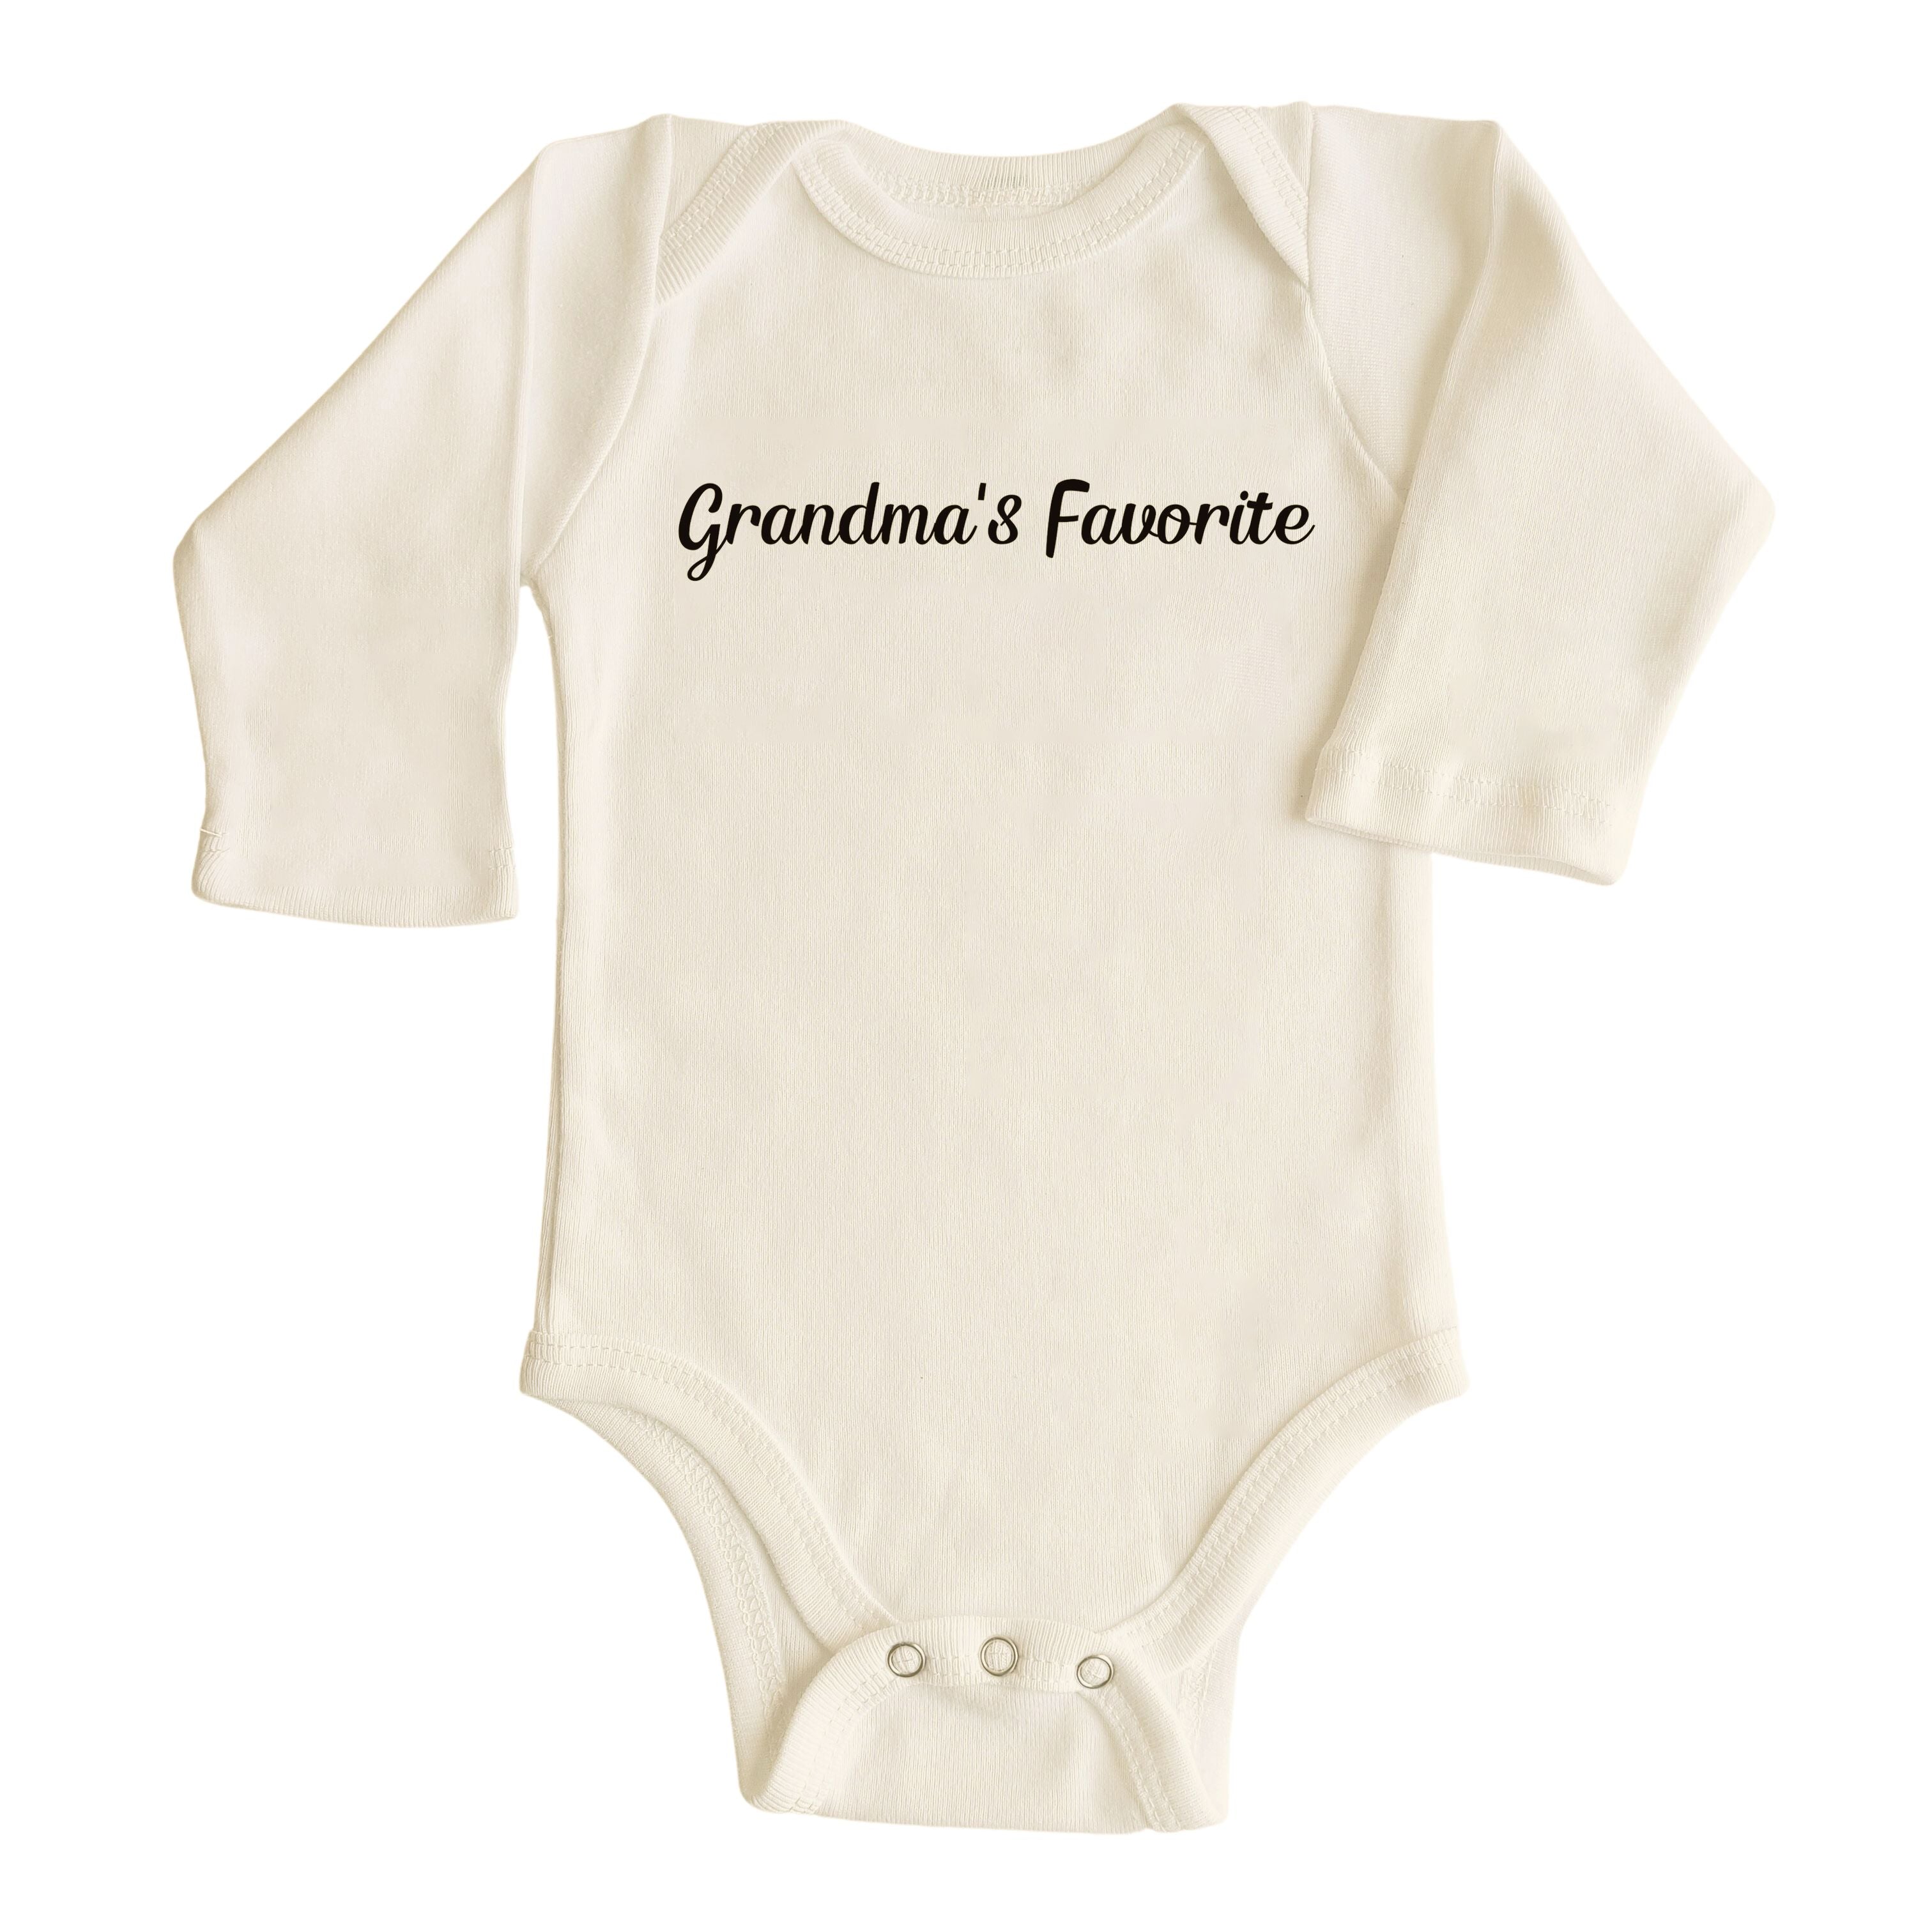 Jedbaby Grandma's Favorite Long Sleeve Organic Cotton Baby Onesie Bodysuit